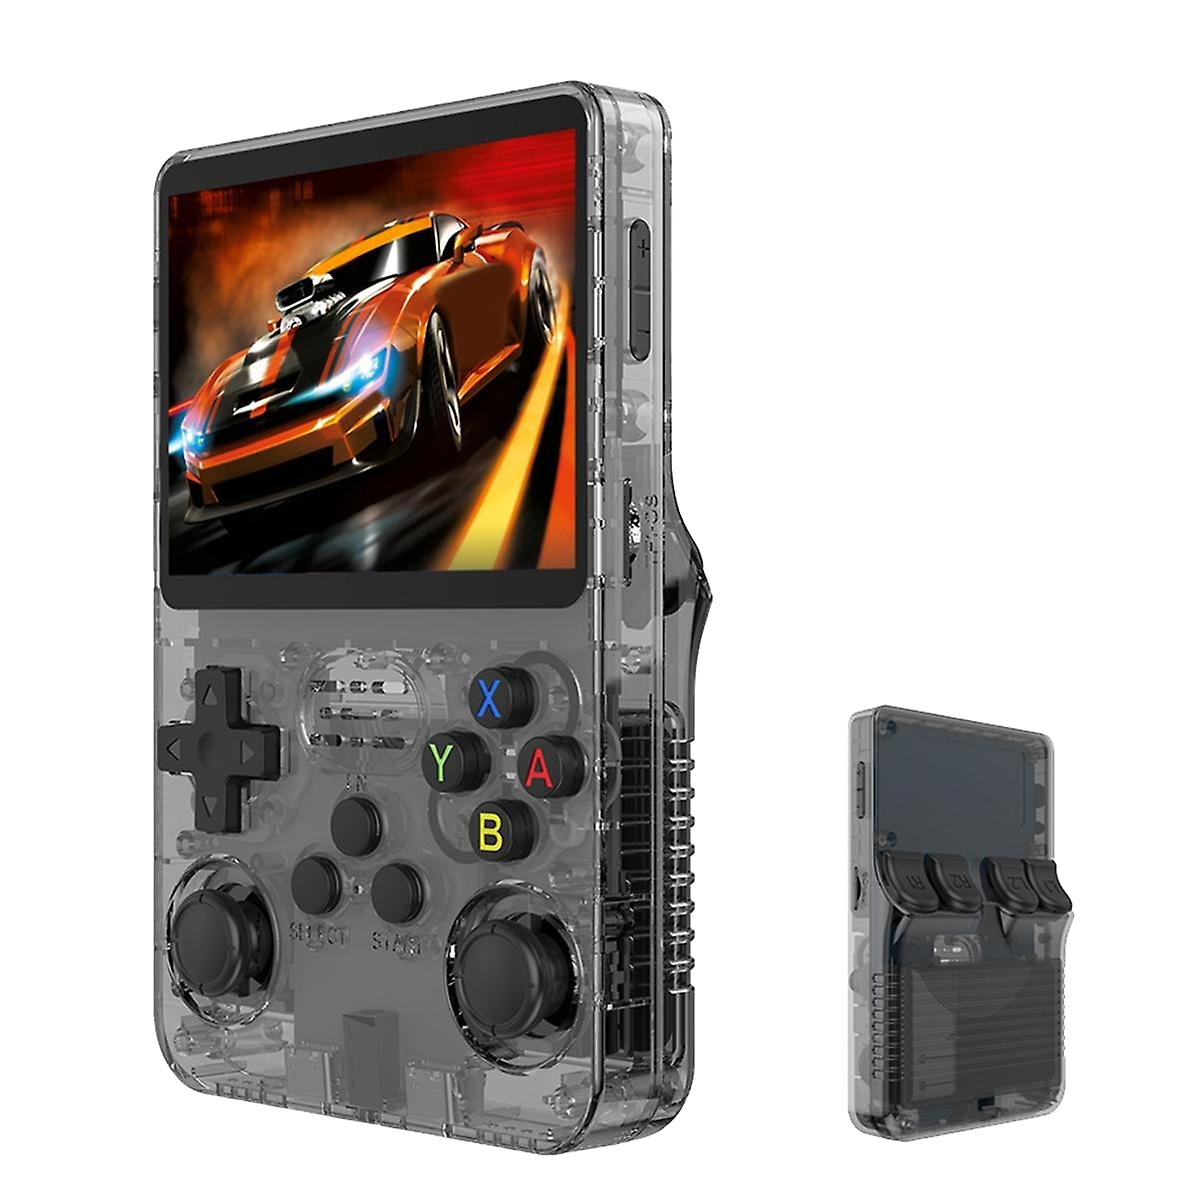 Console Rétro Gaming Portable